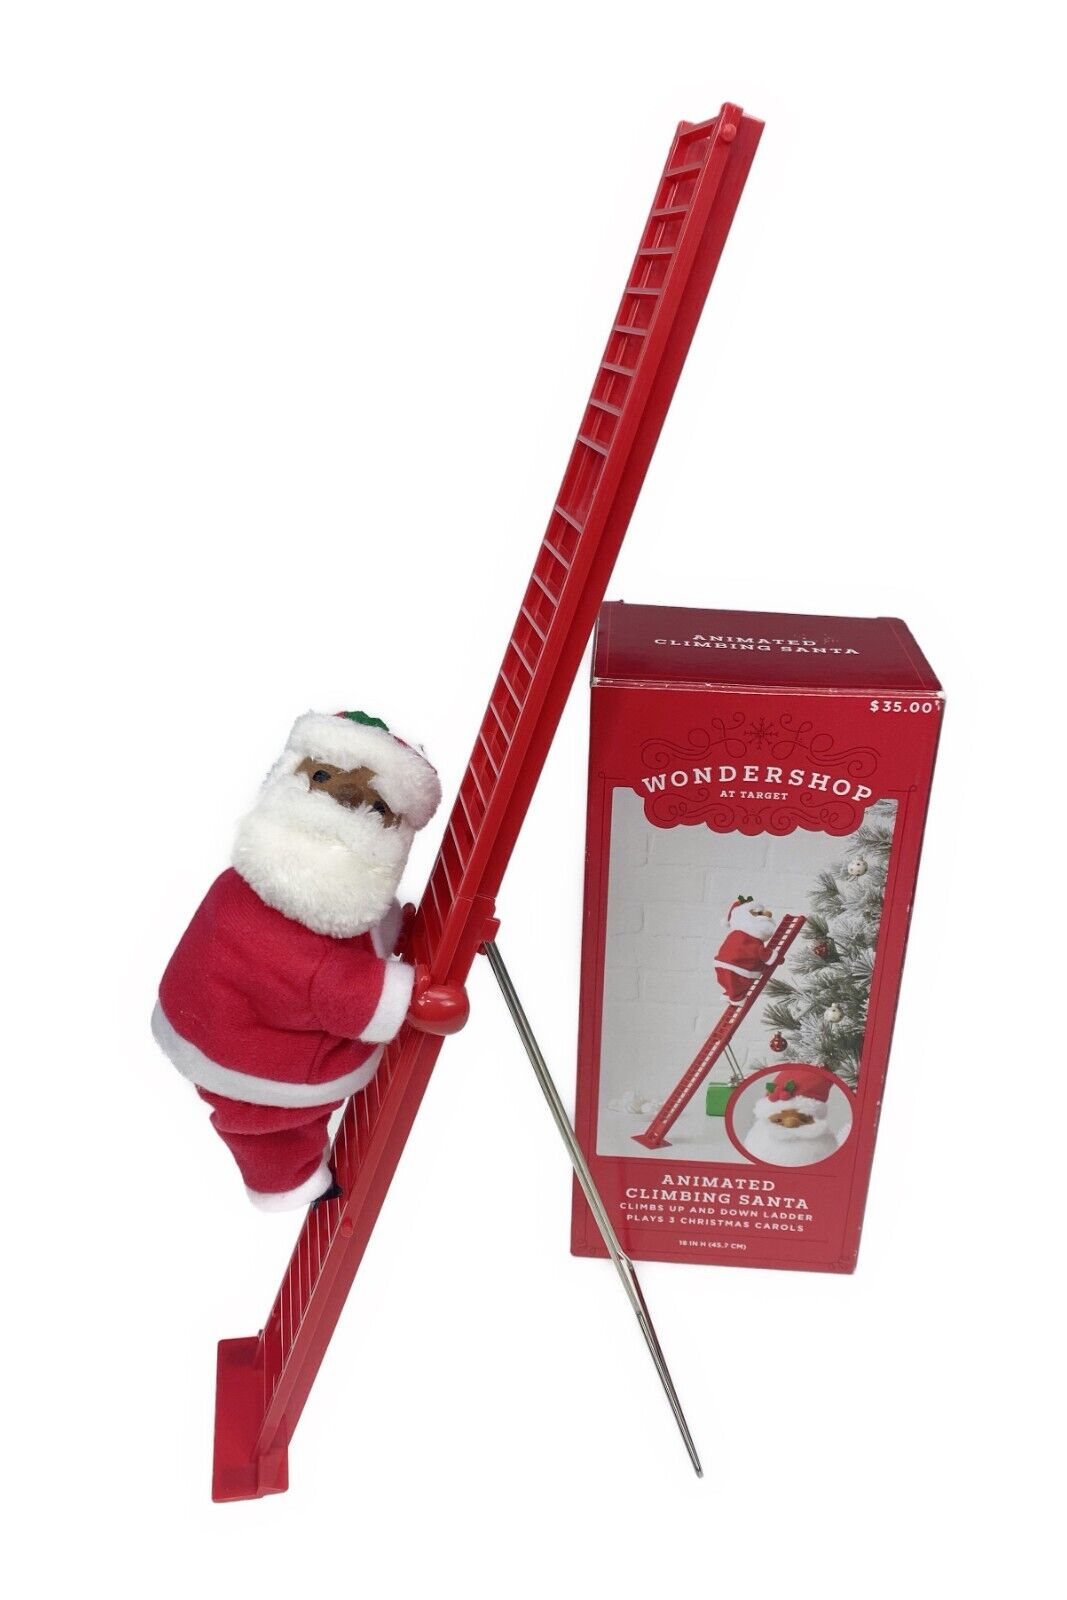 18” Animated Figurine Climbing Santa Wondershop Target 2019 Christmas Holiday